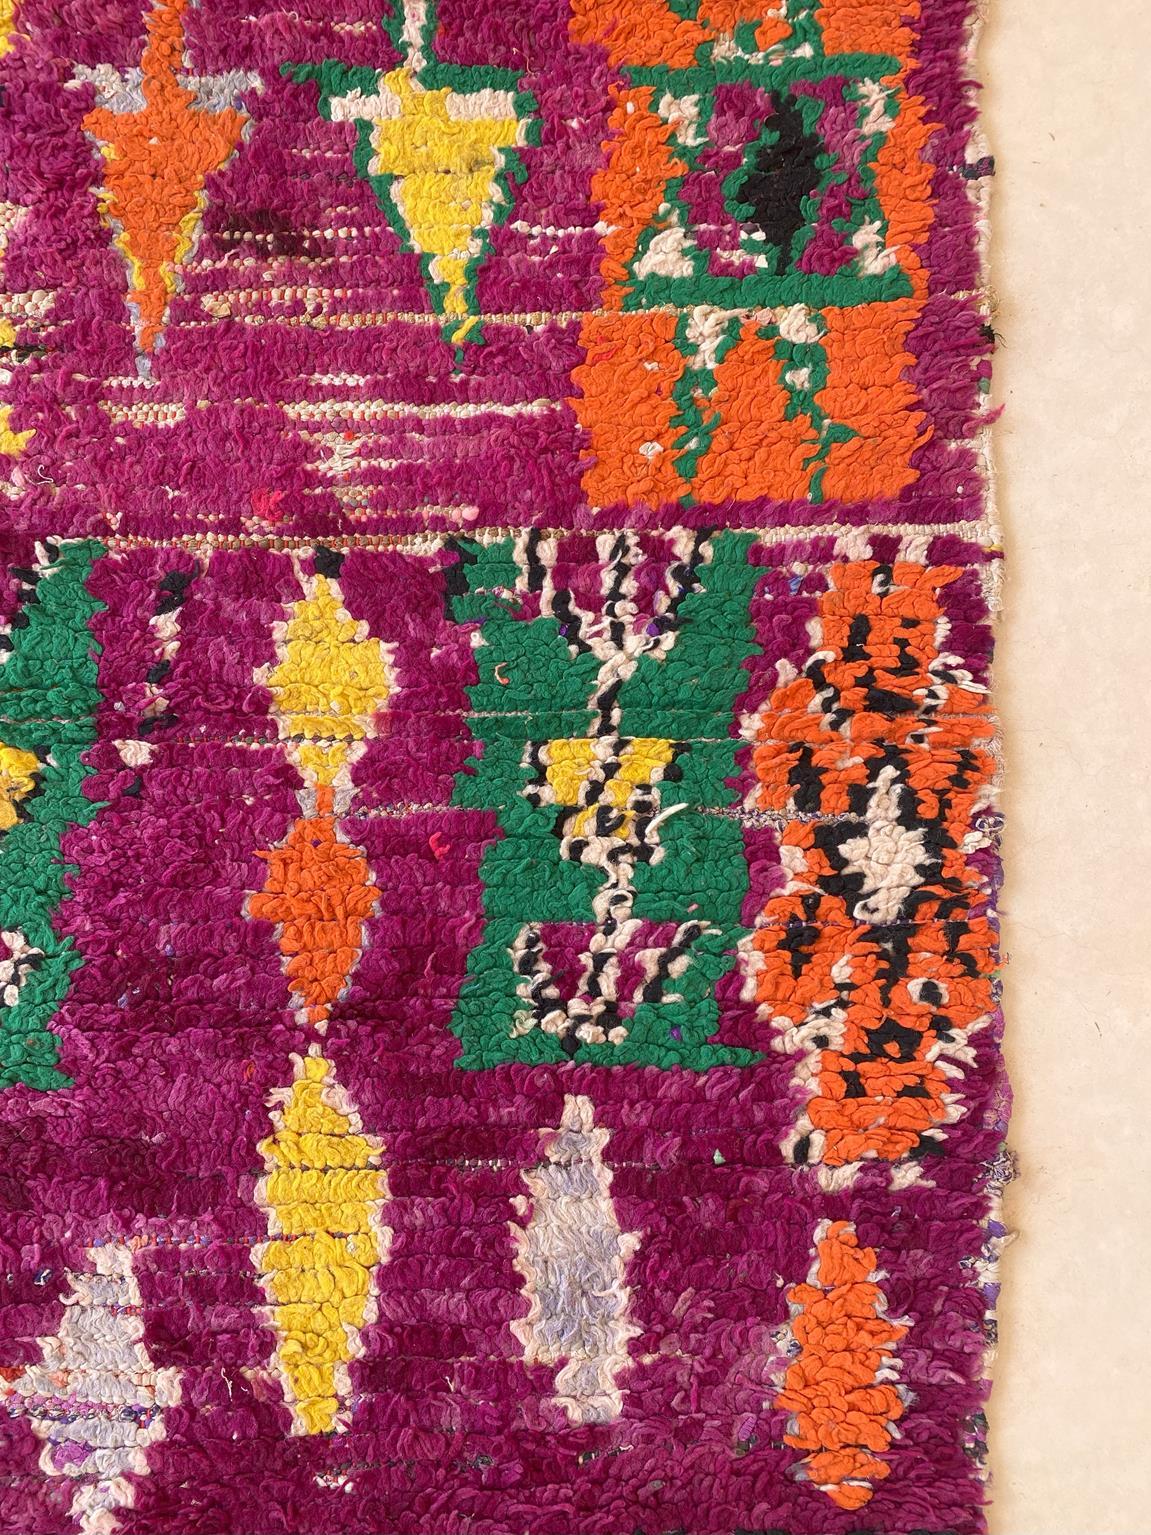 Vintage Moroccan runner rug - Purple/green/orange - 2.8x11.5feet / 87x352cm For Sale 3